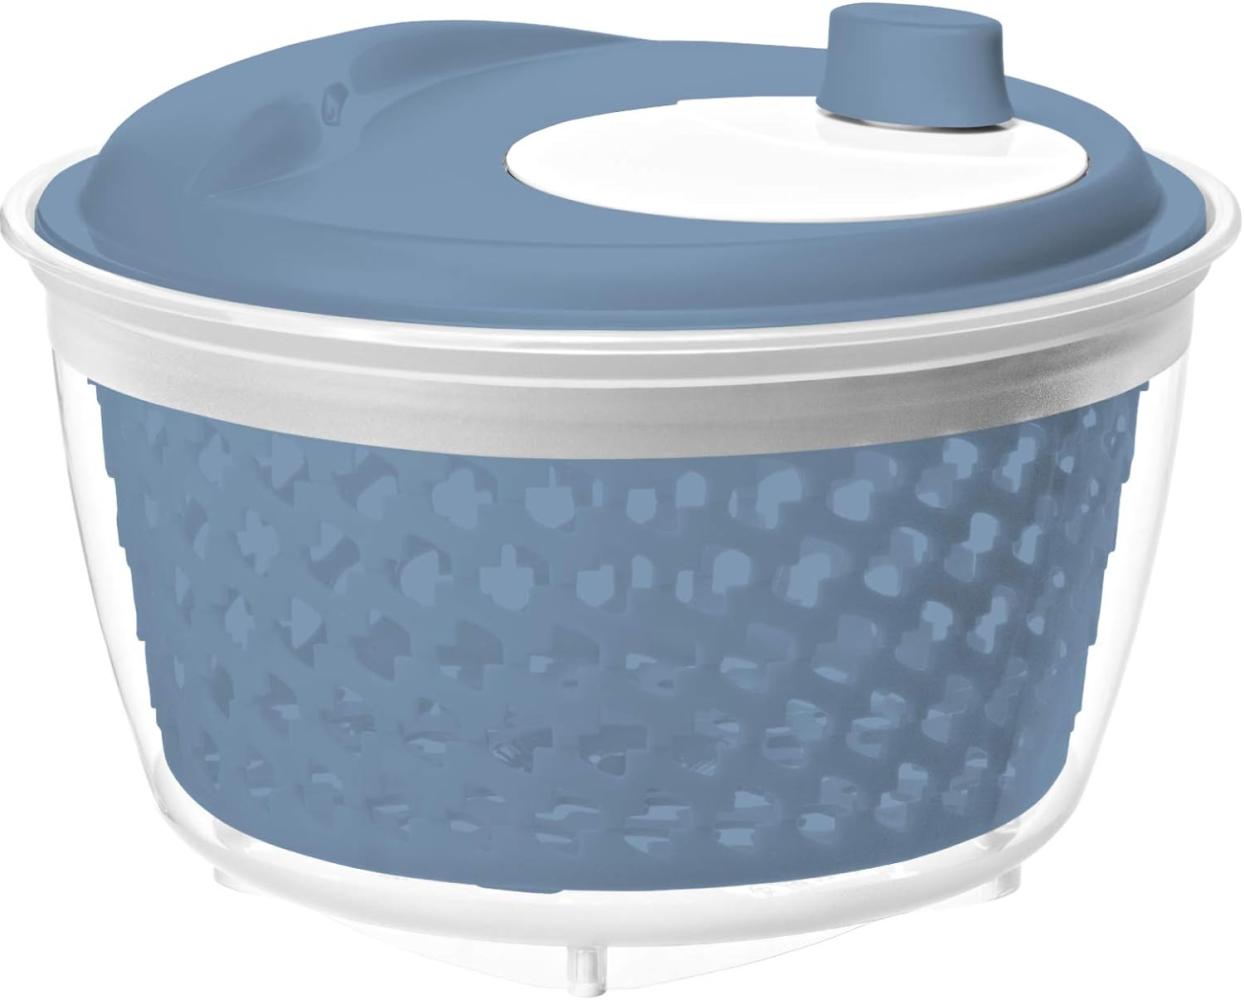 Rotho 1722406161 Fresh Salatschleuder, Kunststoff (PP) BPA-frei, blau/transparent, 4,5l (25,0 x 25,0 x 16,5 cm) Bild 1